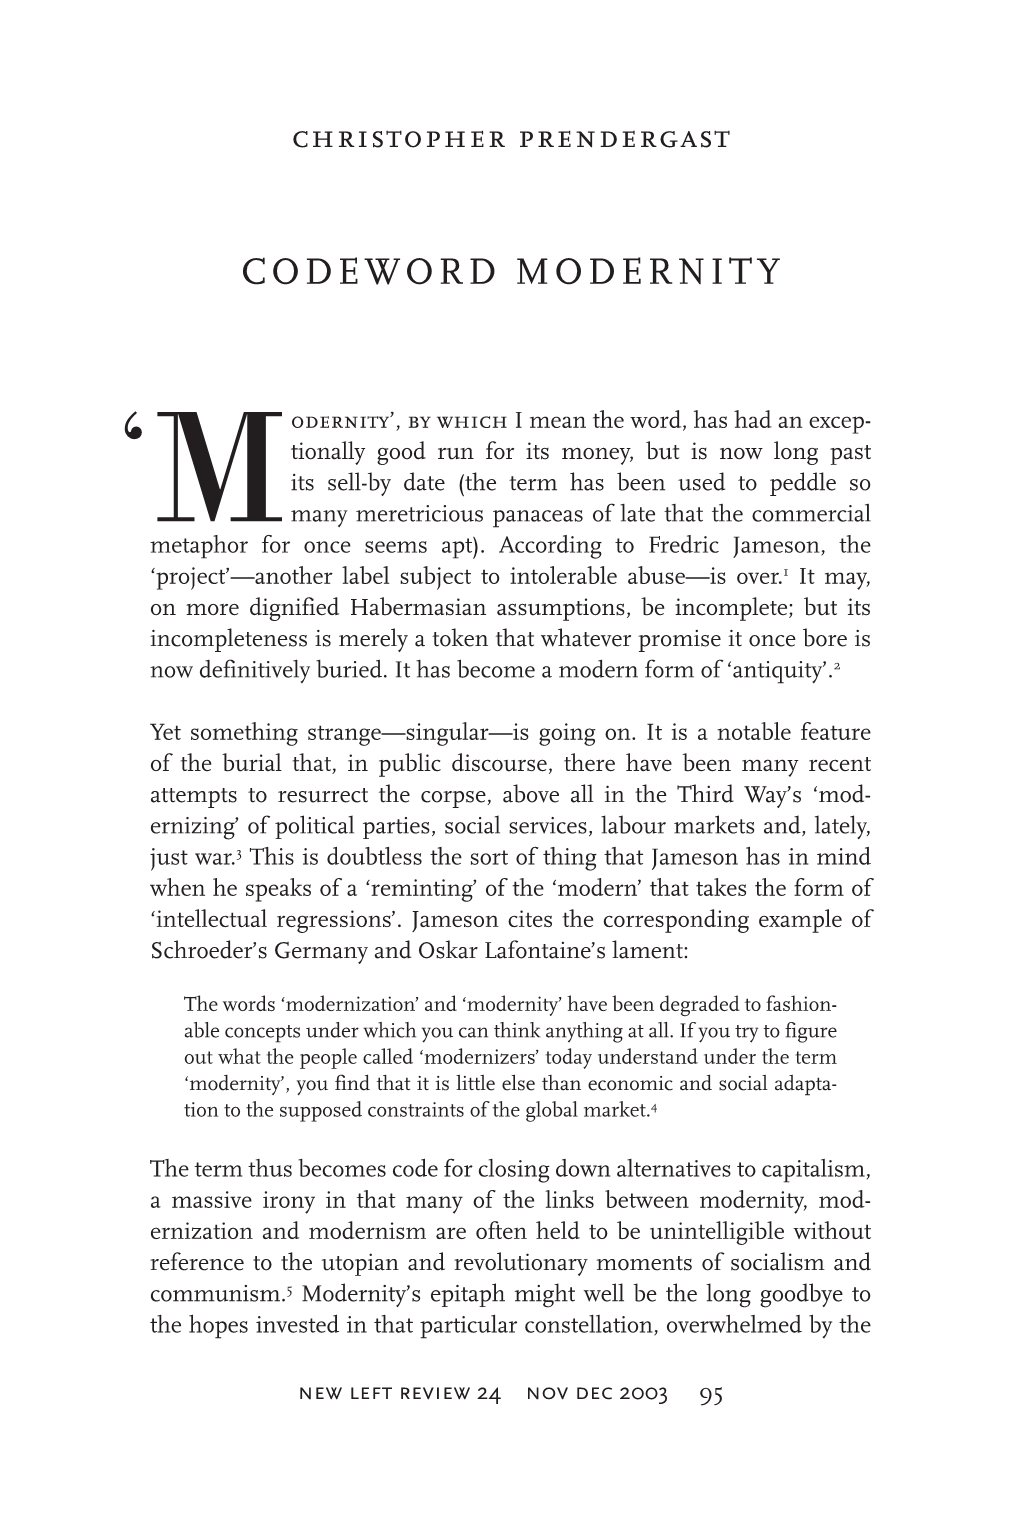 Codeword Modernity